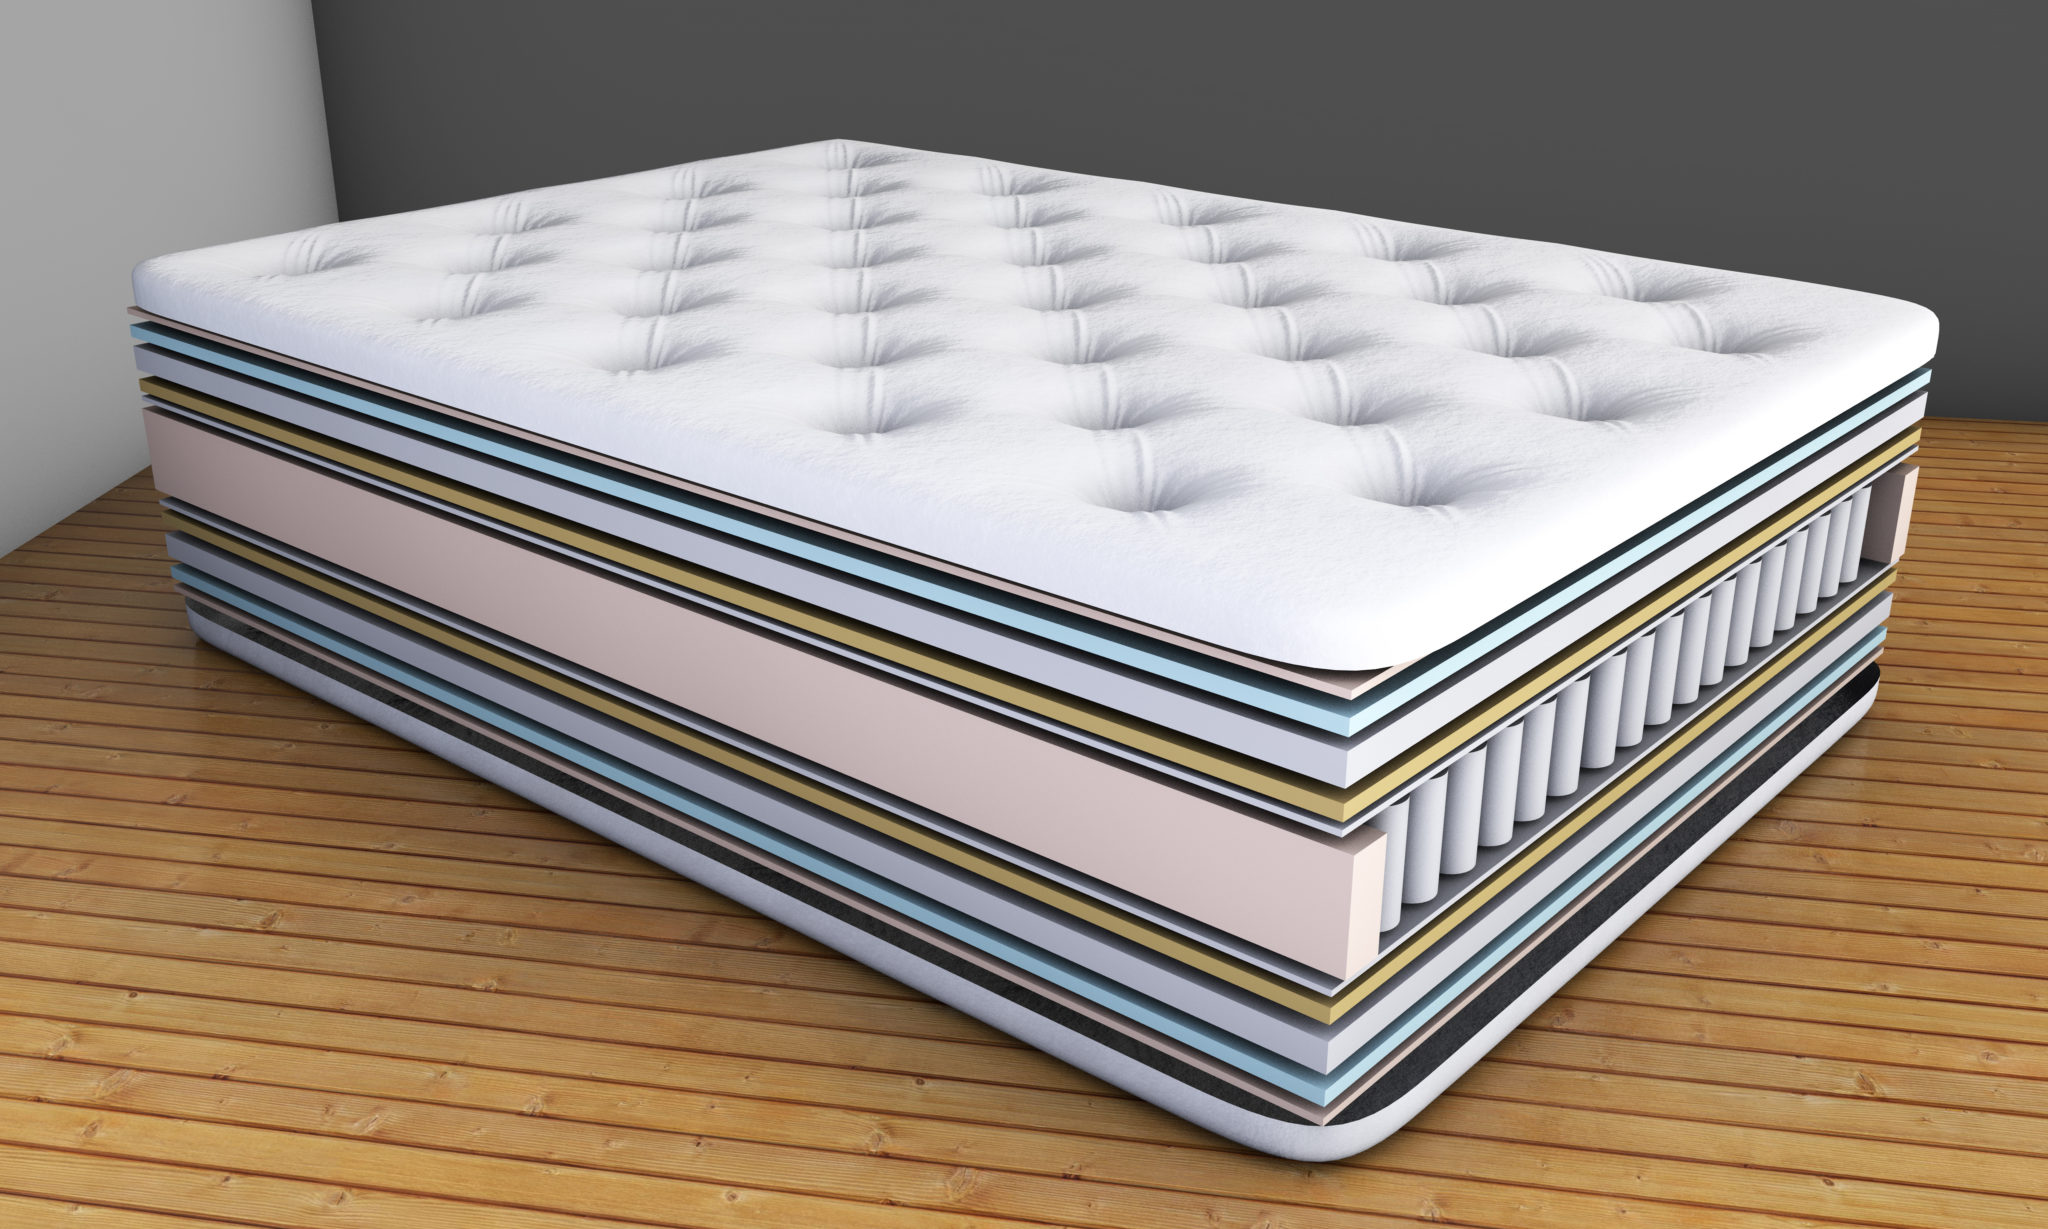 hybrid mattress combines spring